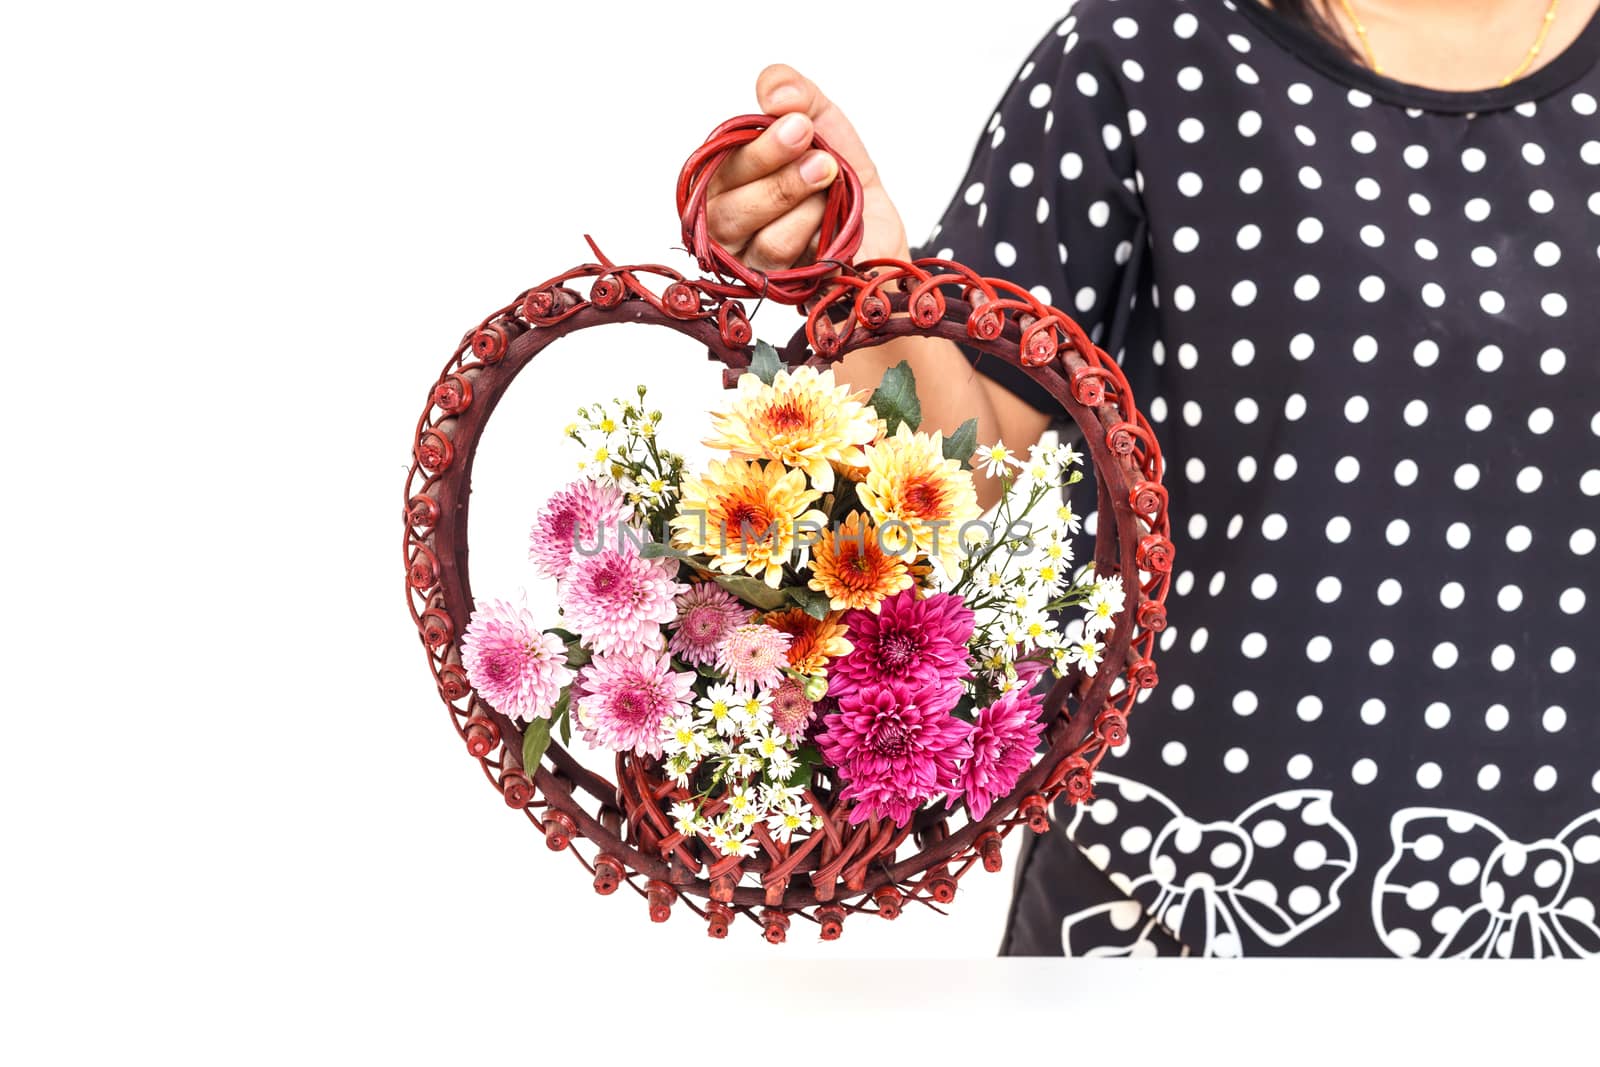 Hand holding Flower in wooden handmade basket isolated on white background